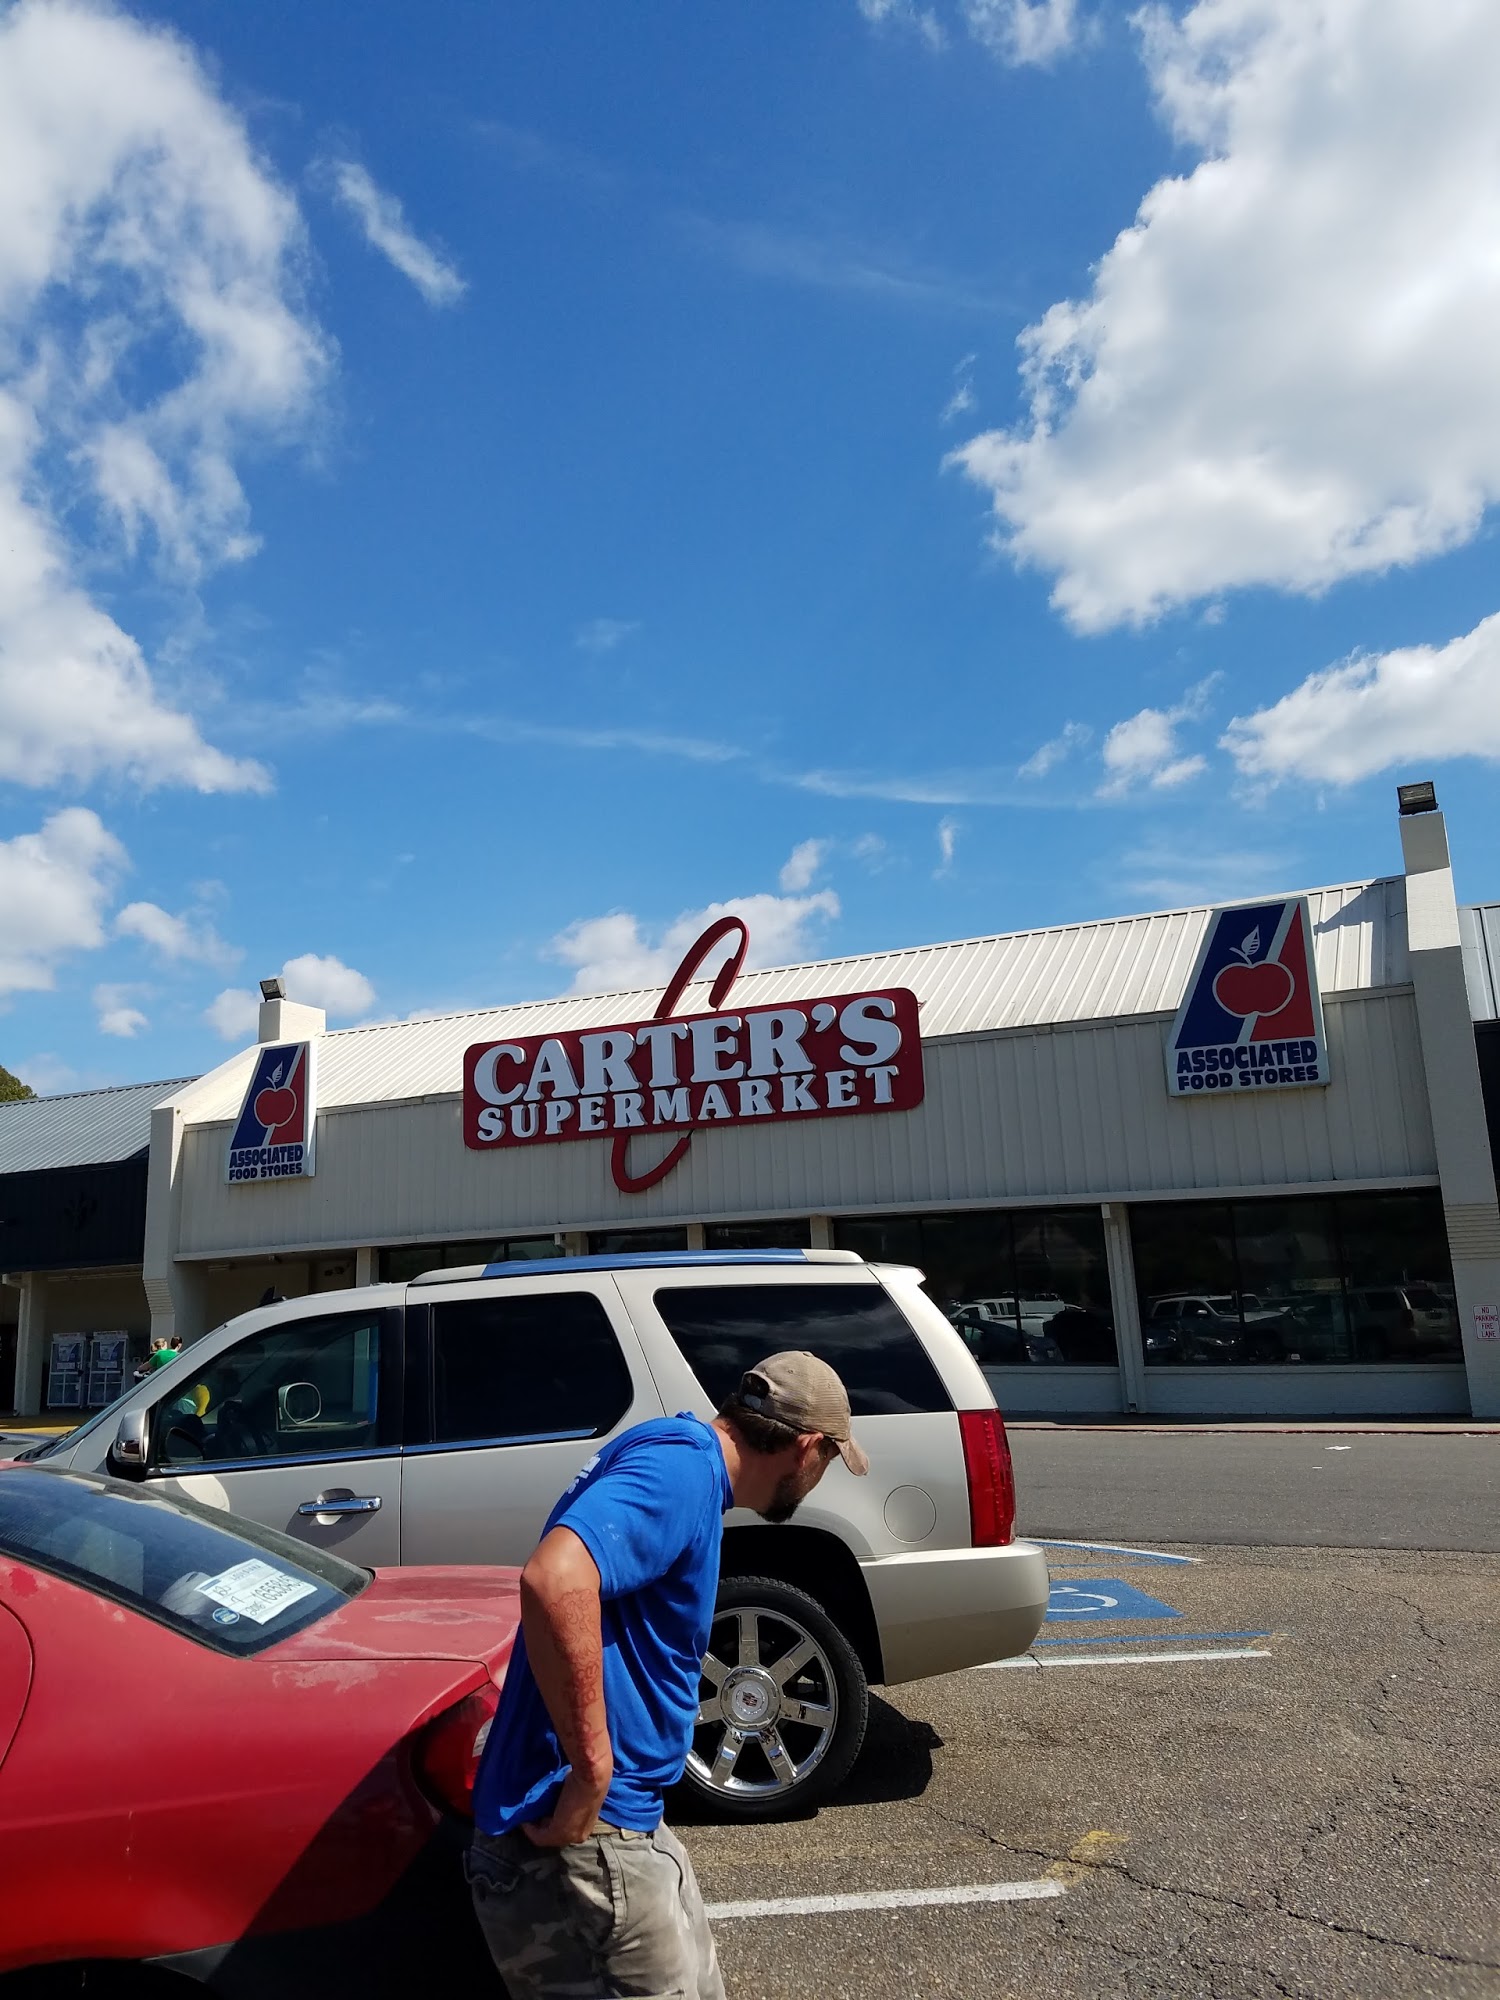 Carter's Supermarket